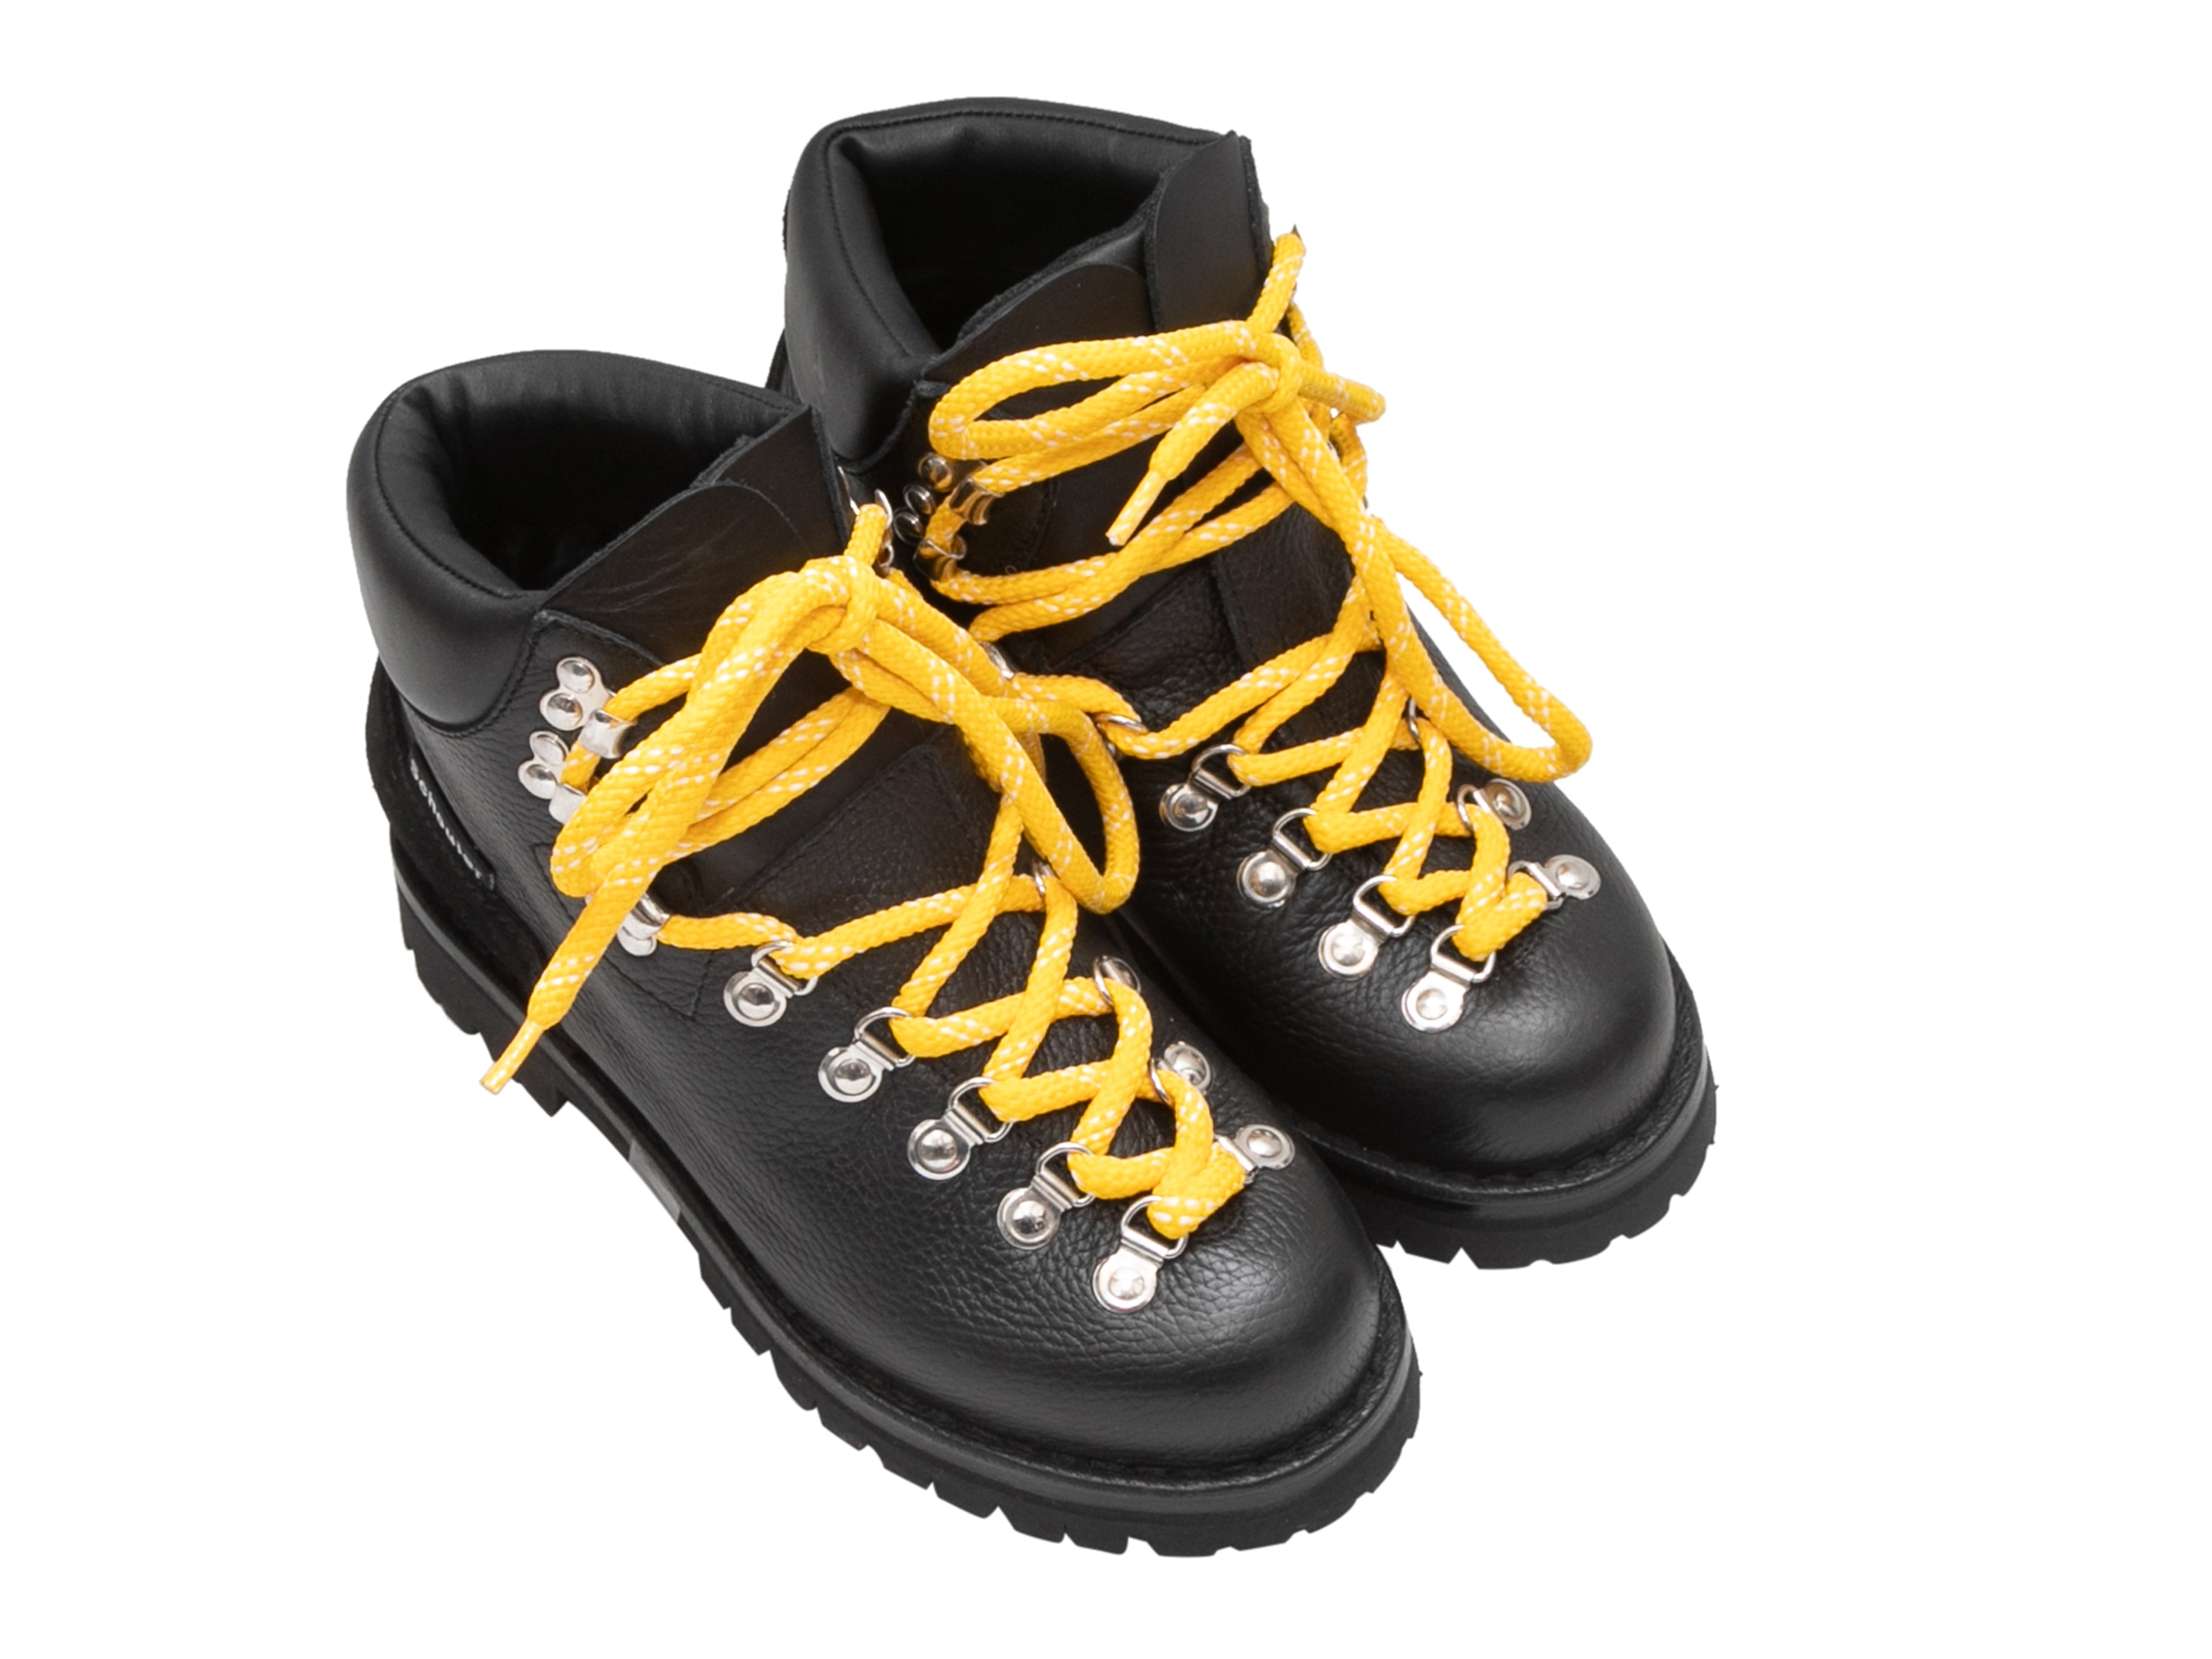 Black Proenza Schouler Leather Hiking Boots Size 38 - Atelier-lumieresShops Revival